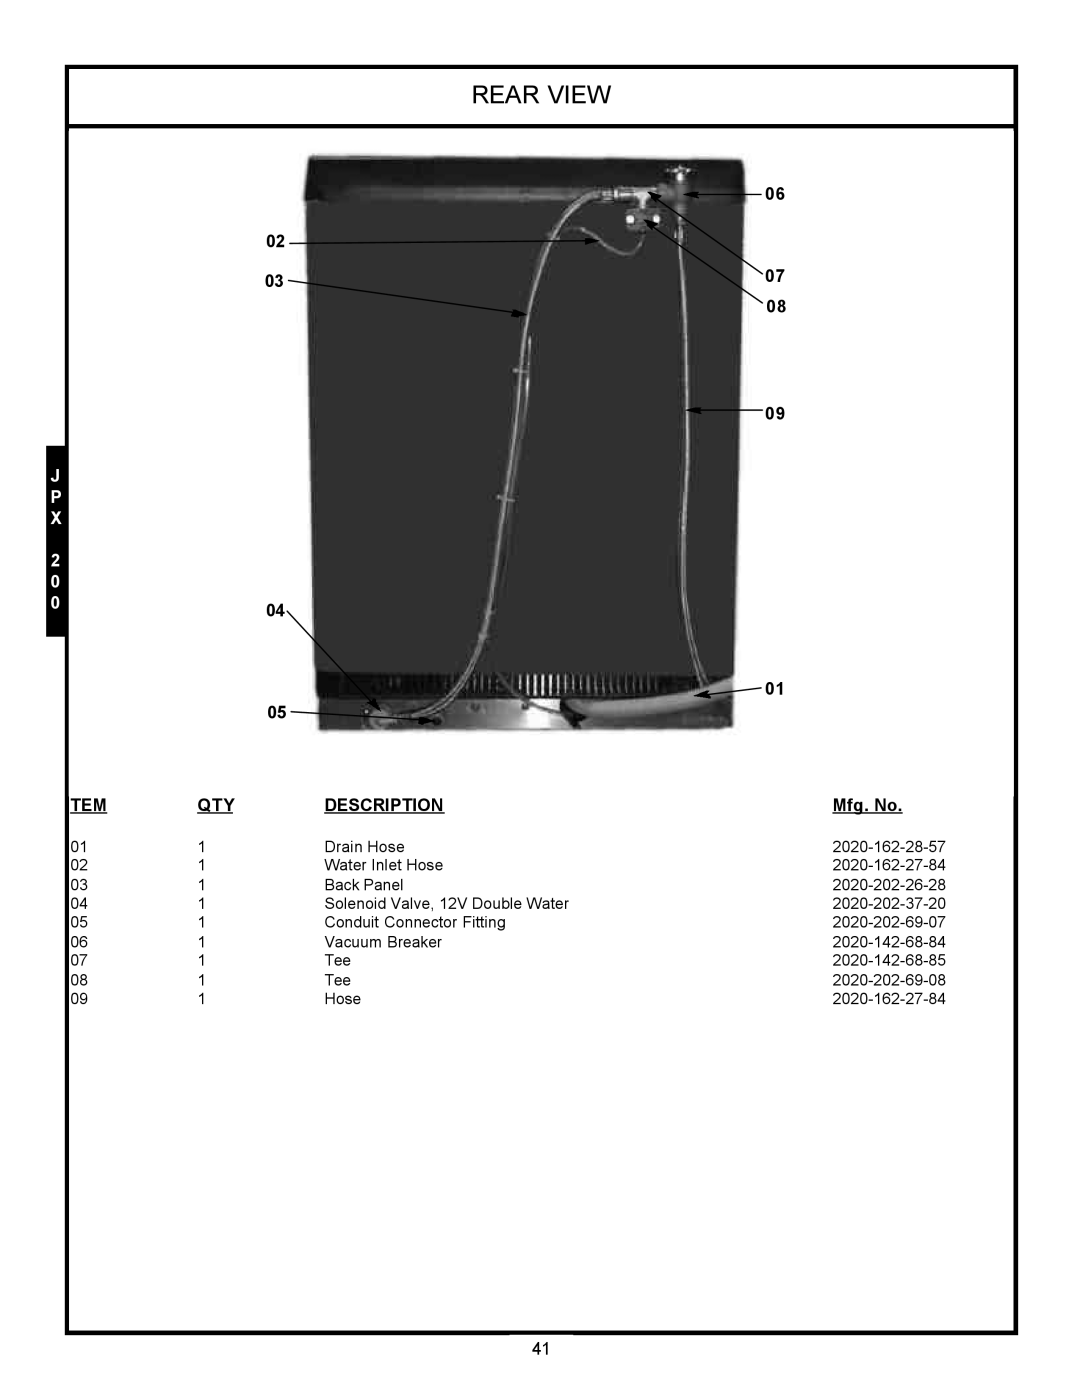 Jackson jpx-140, JPX-200, JPX-160 service manual Rear View, Description, Mfg. No, Solenoid Valve, 12V Double Water 